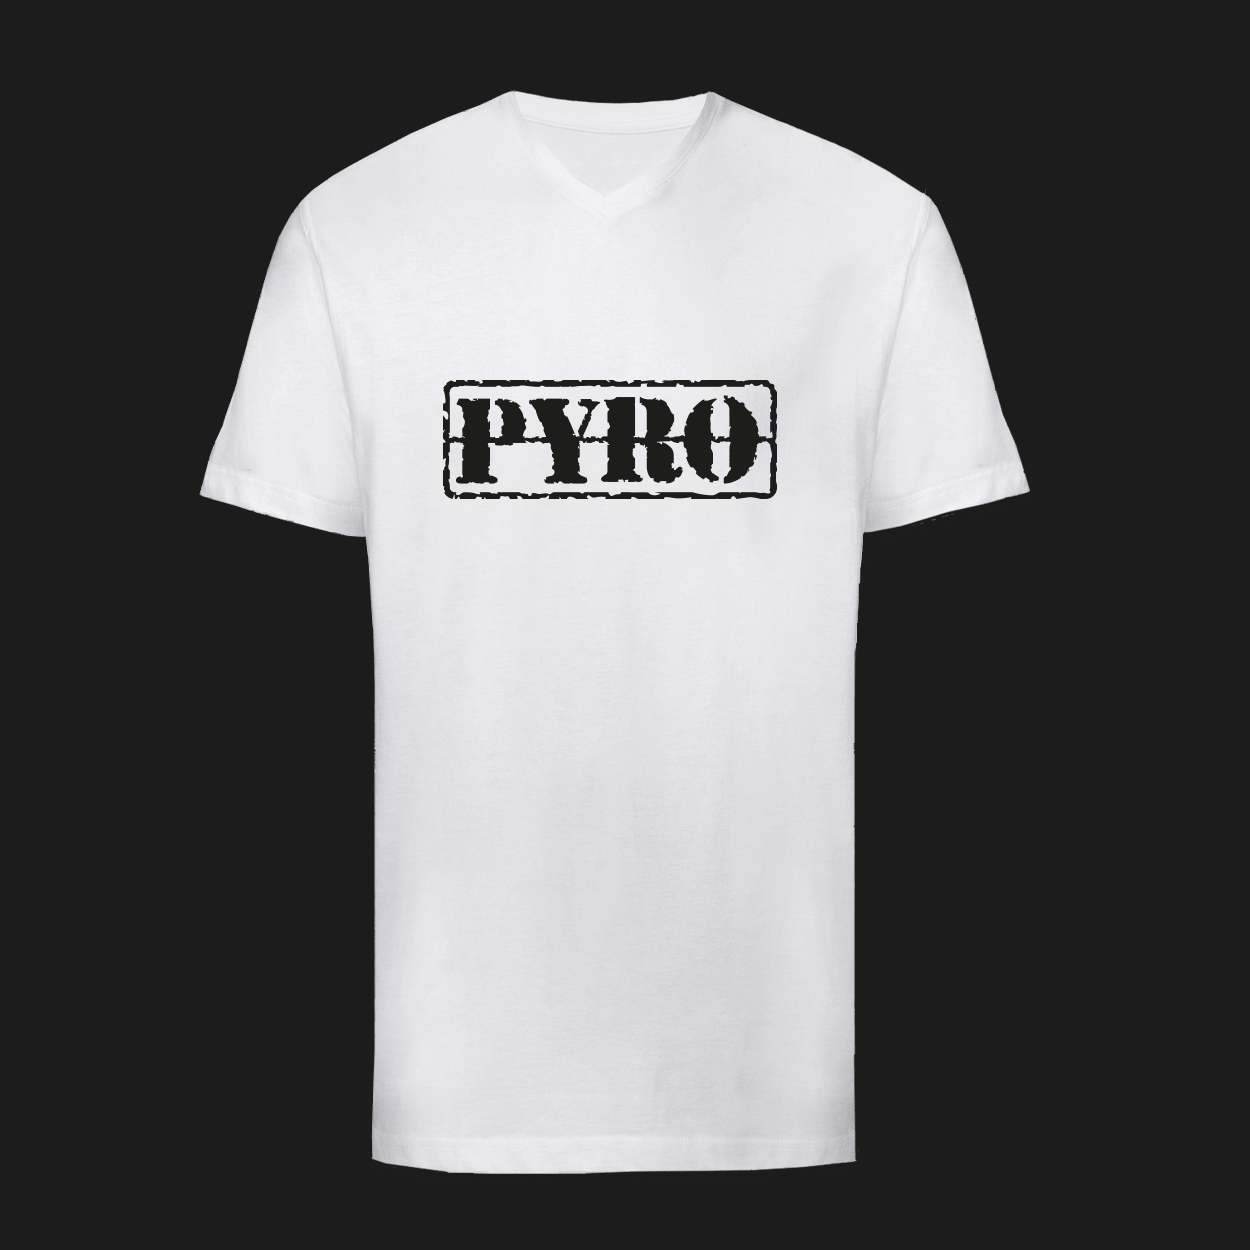 PYRO Shirt White